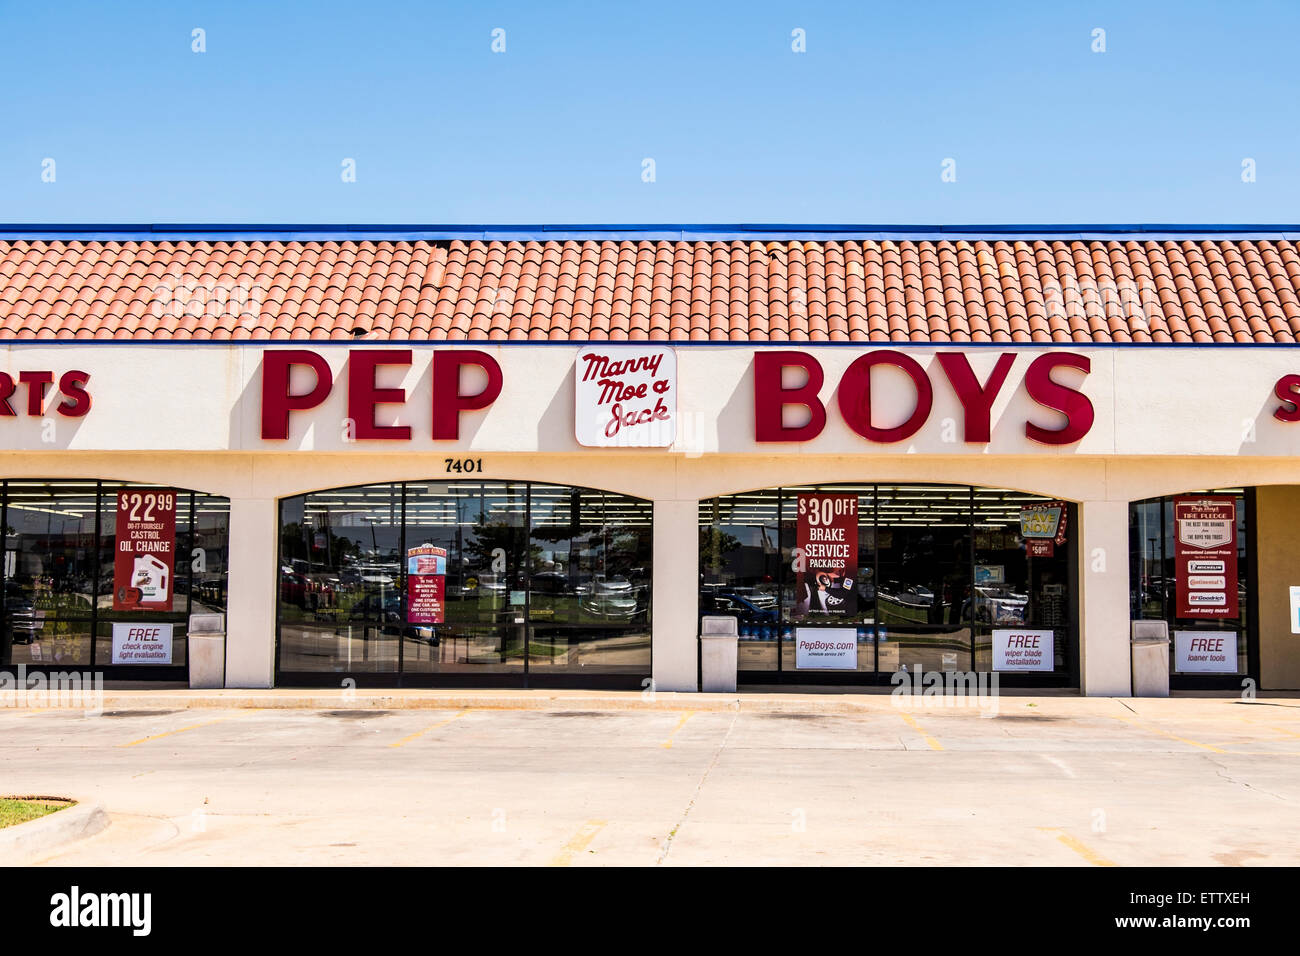 Pep Boys Manny Moe & Jack automotive aftermarket chain, exterior. Oklahoma City, Oklahoma, USA, United States Stock Photo